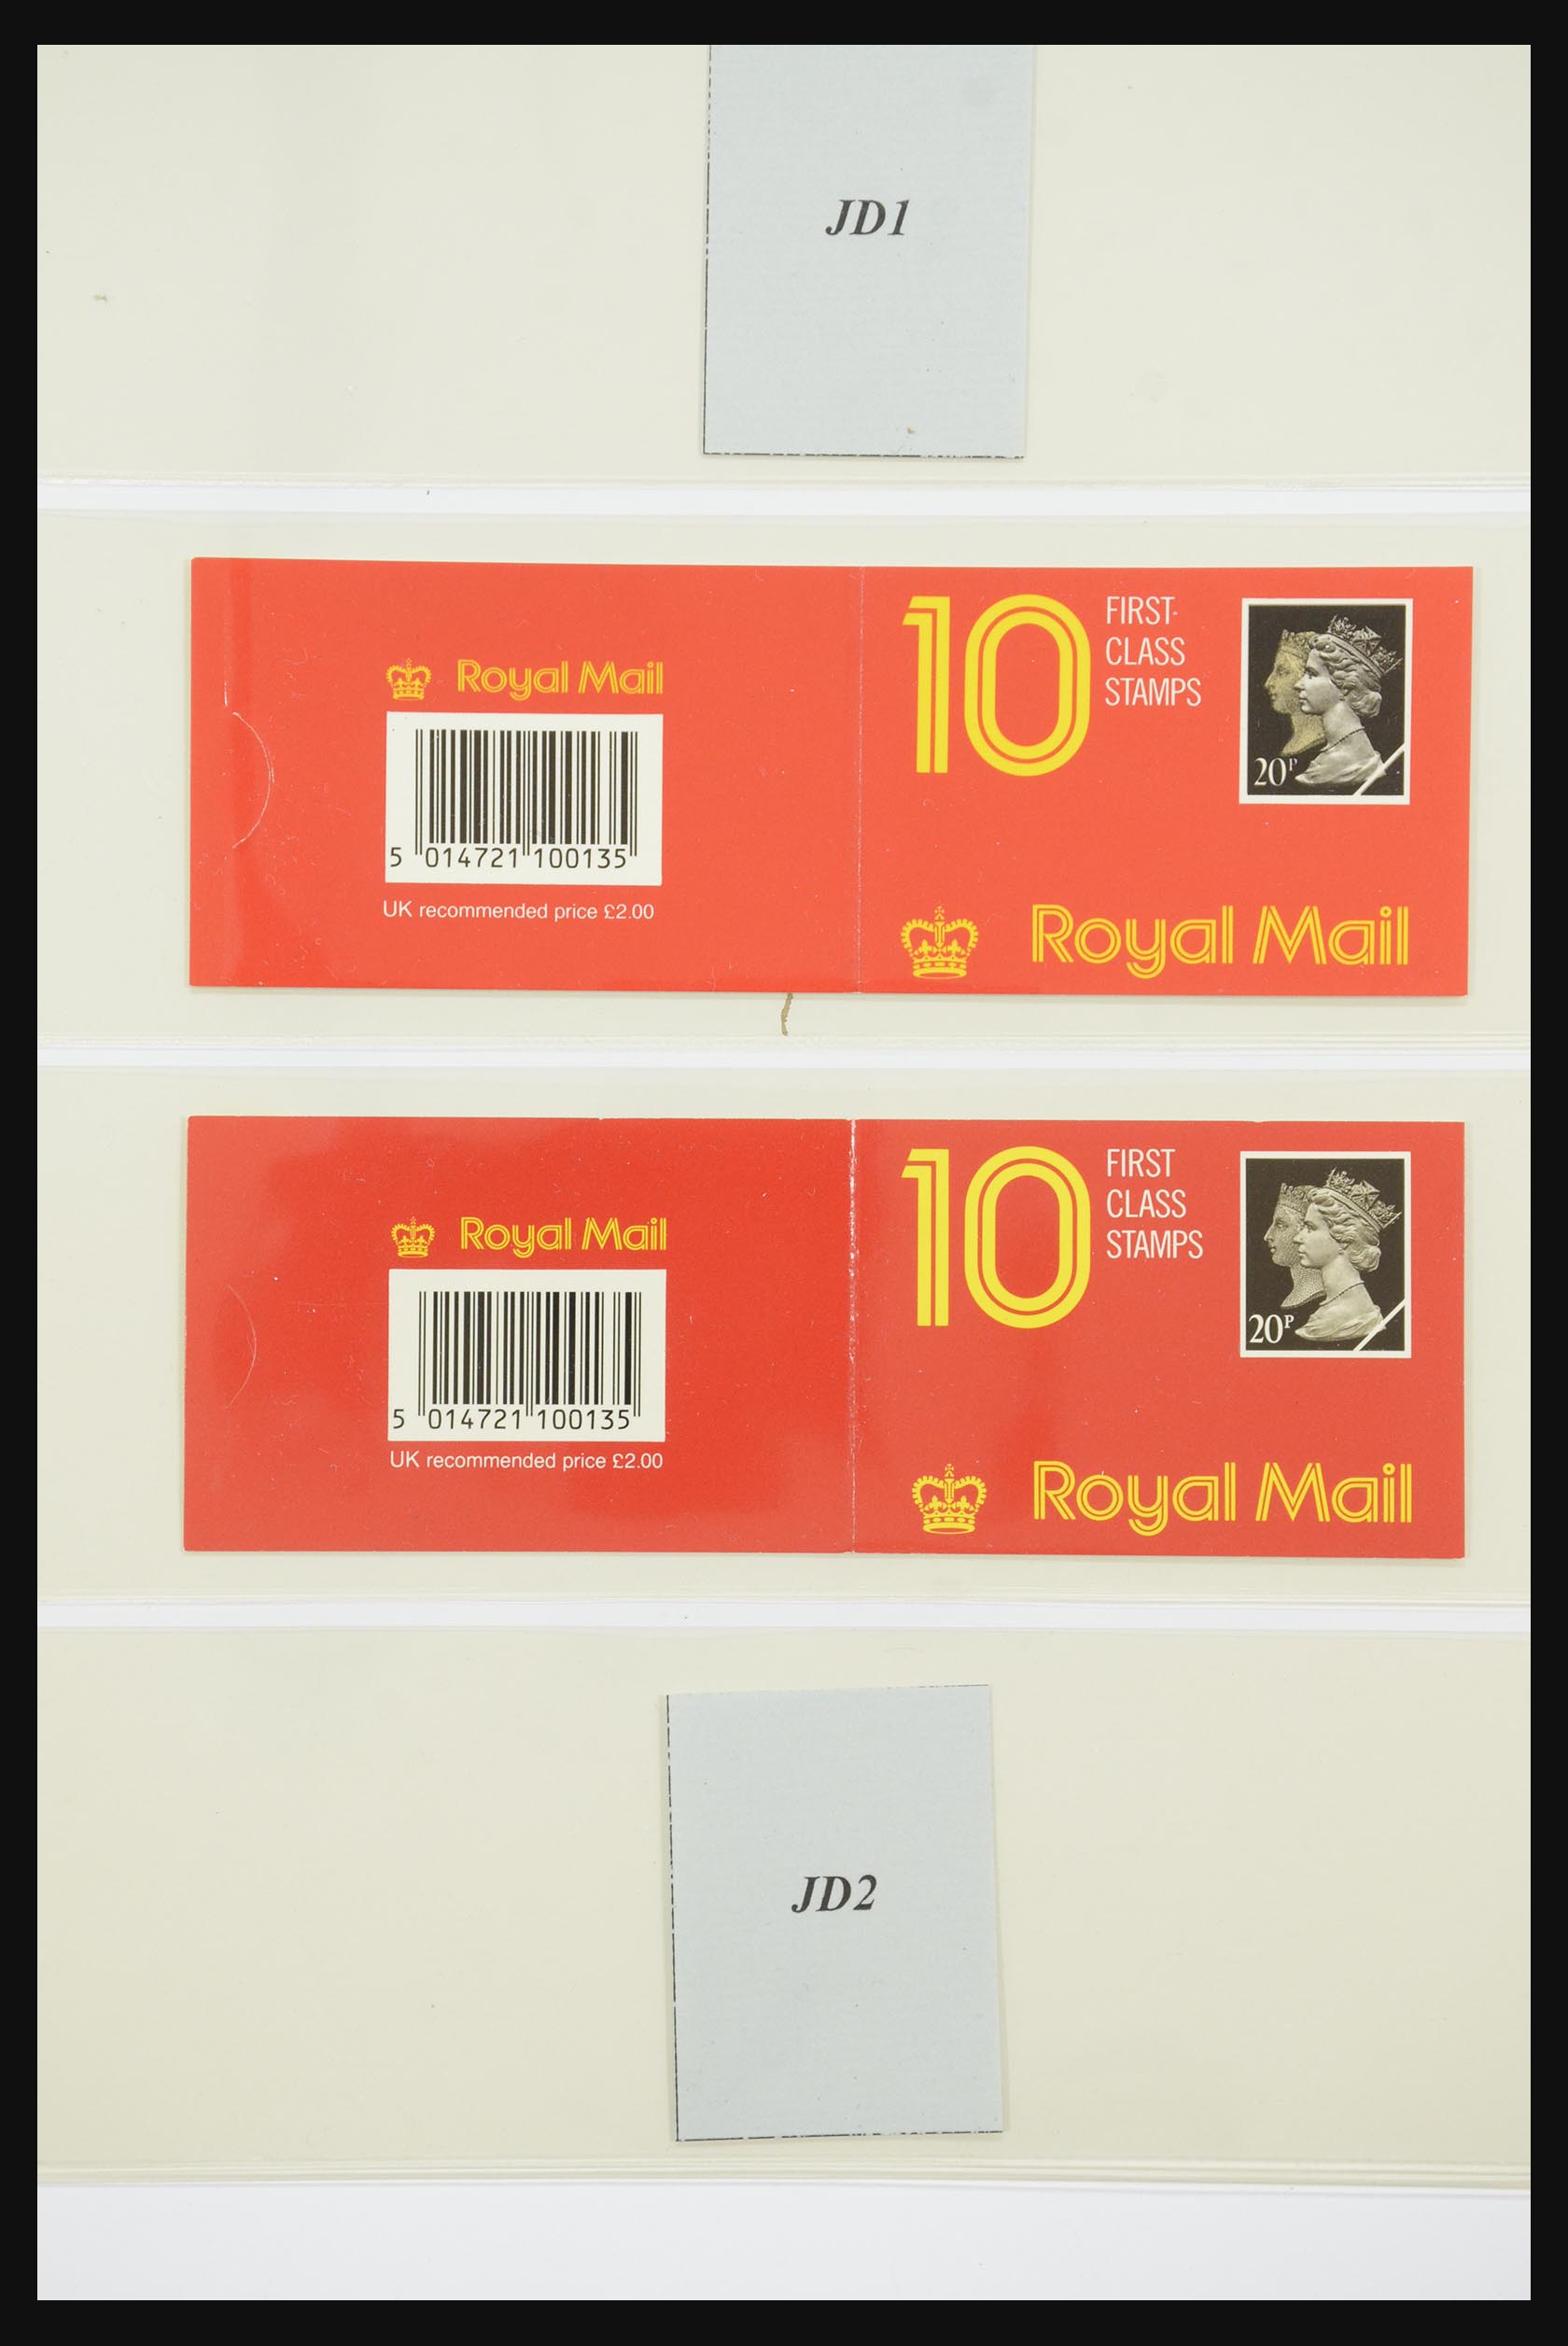 31960 187 - 31960 Great Britain stampbooklets 1989-2000.